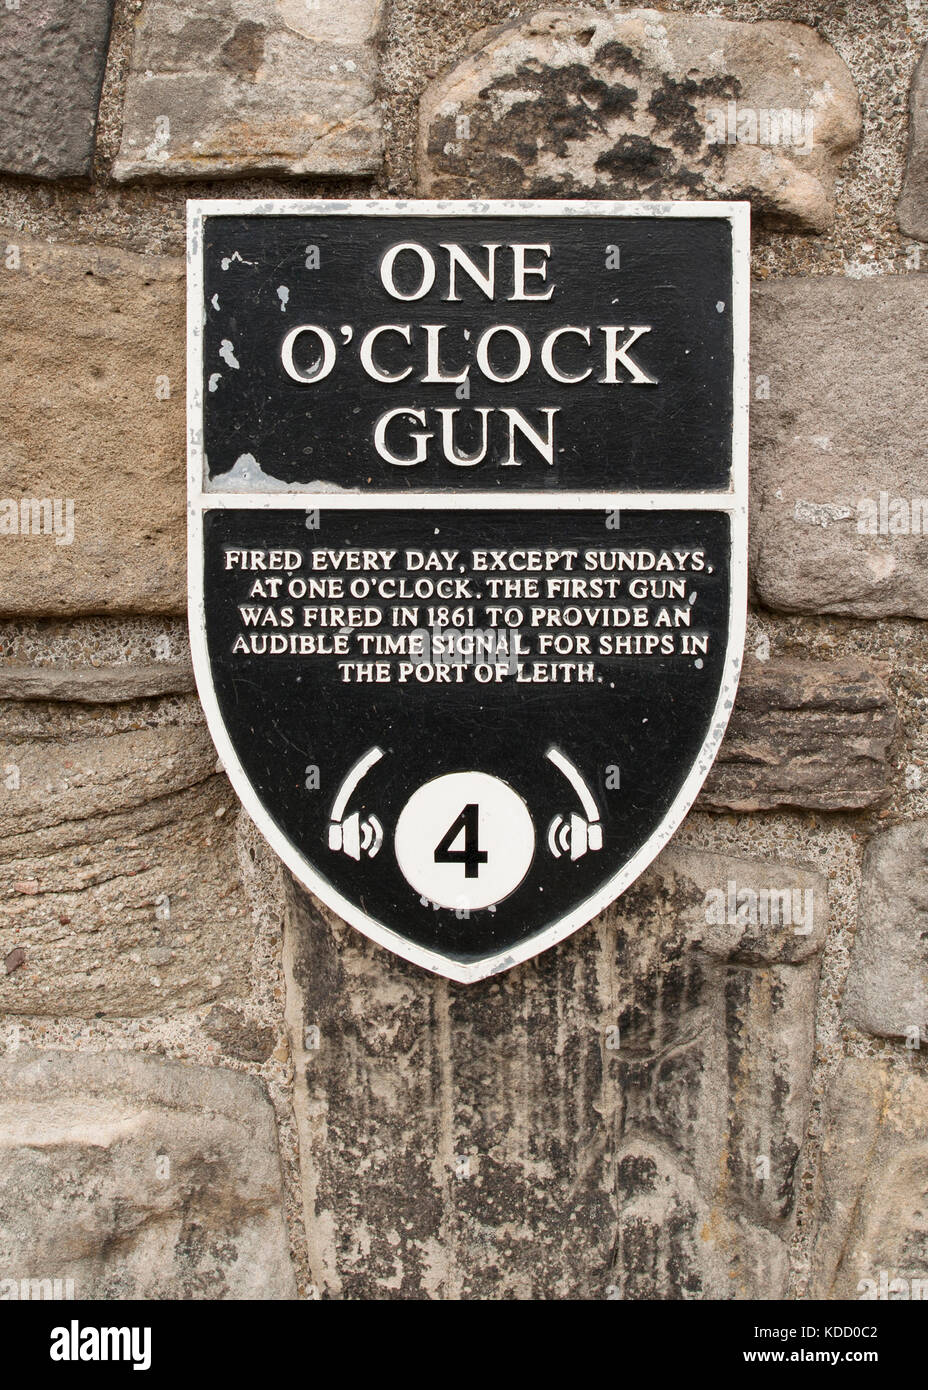 Information sign for the One o'clock gun at Edinburgh castle in Scotland. Stock Photo